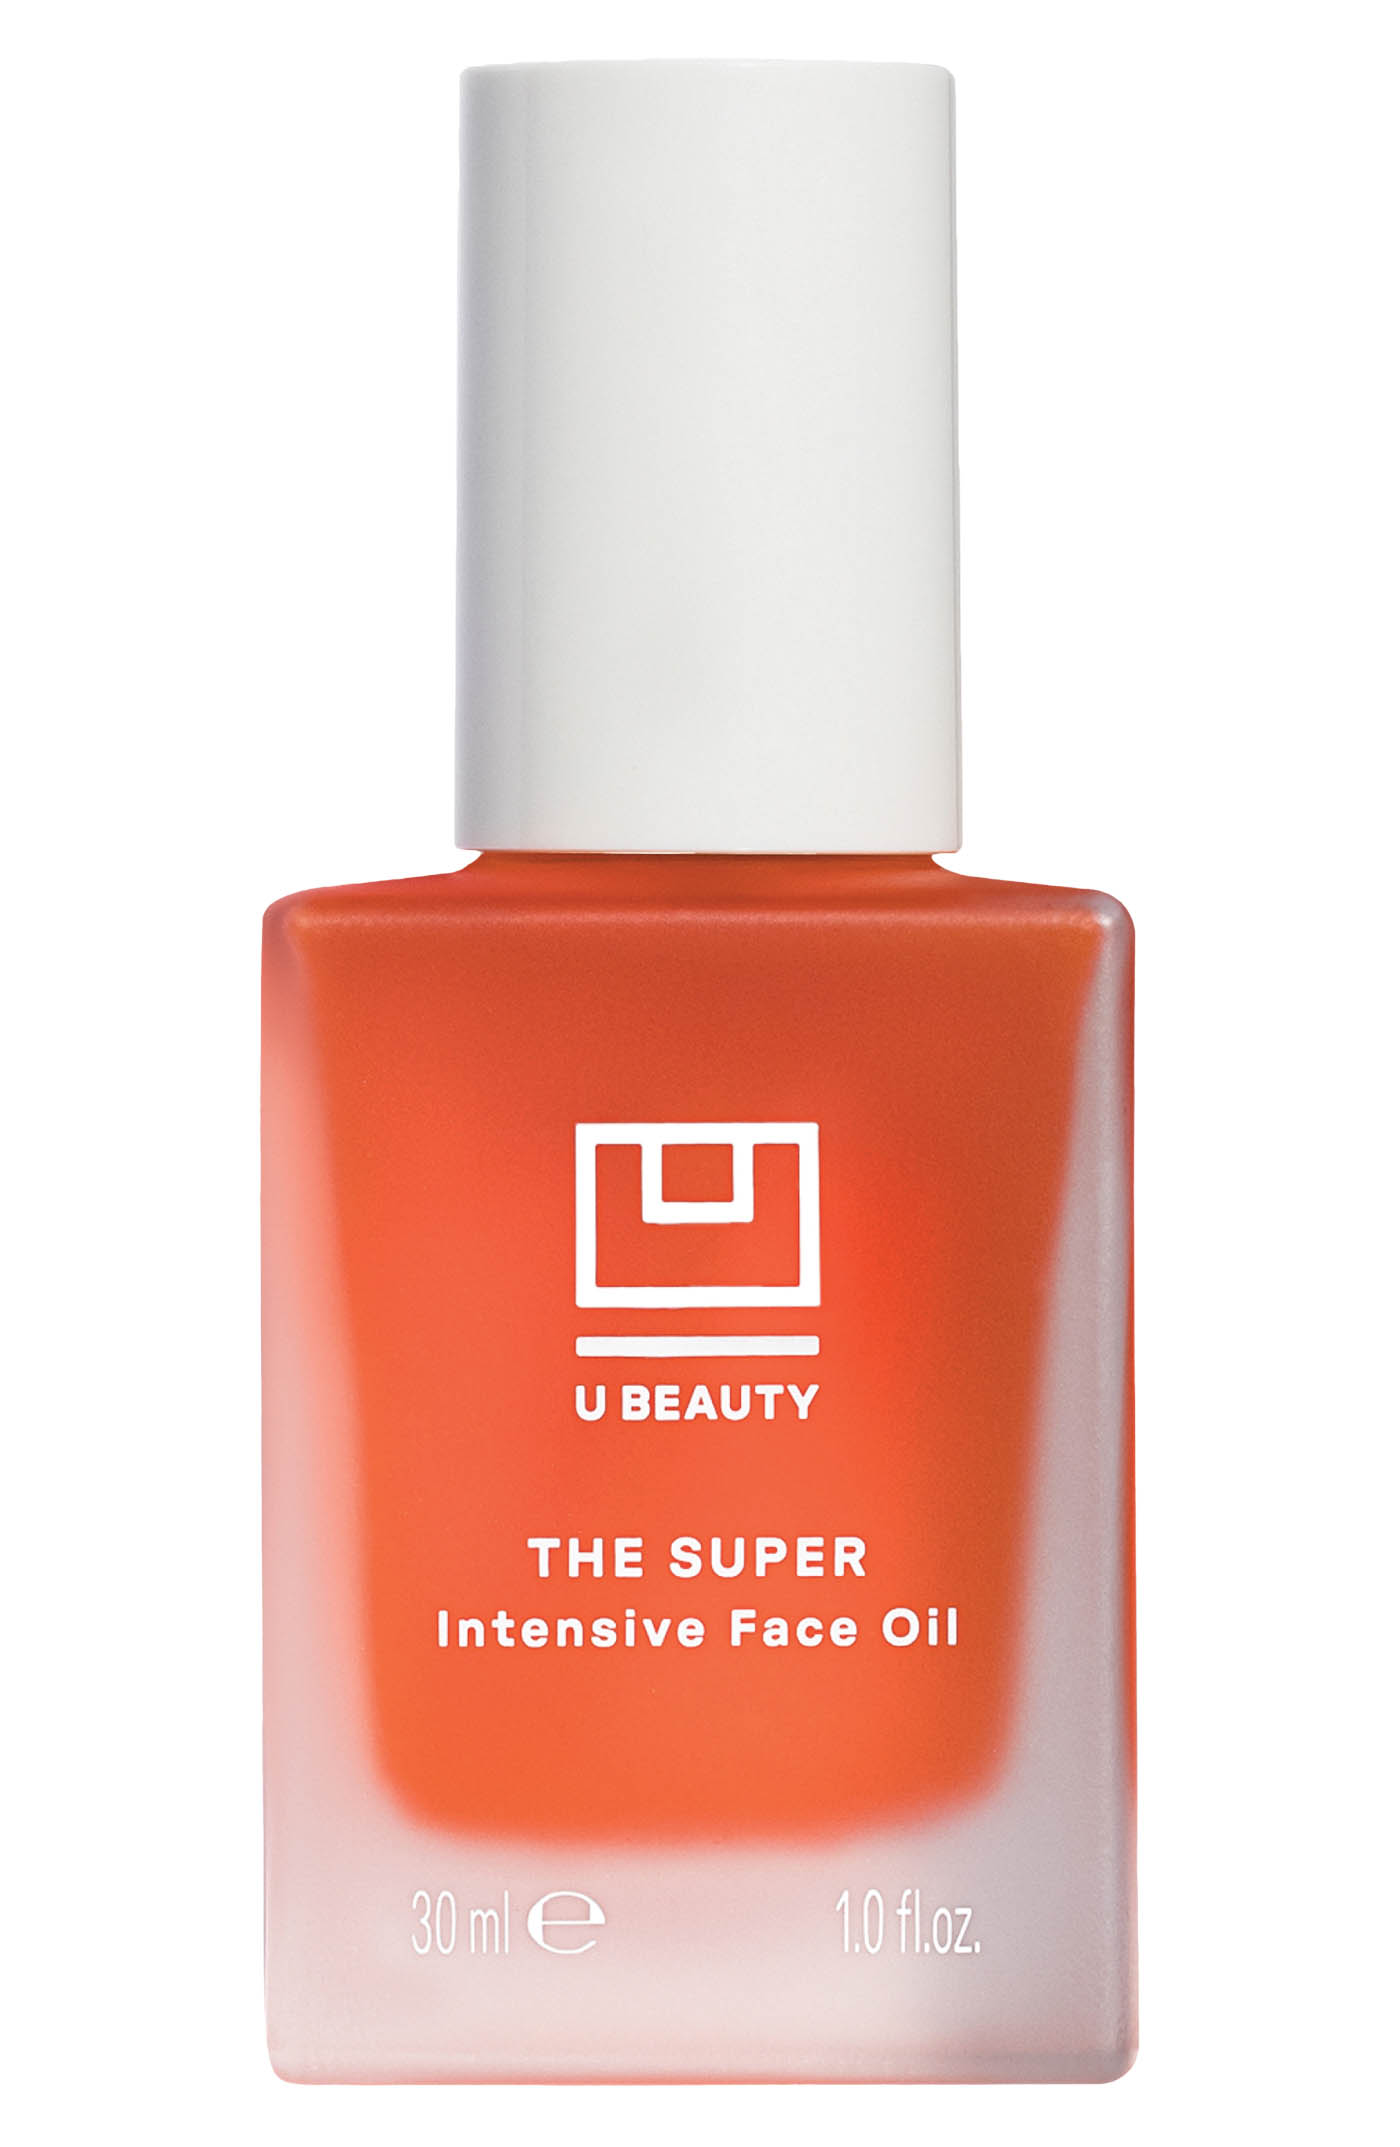 26 U Beauty, The Super Intensive Face Oil, Nordstrom.com